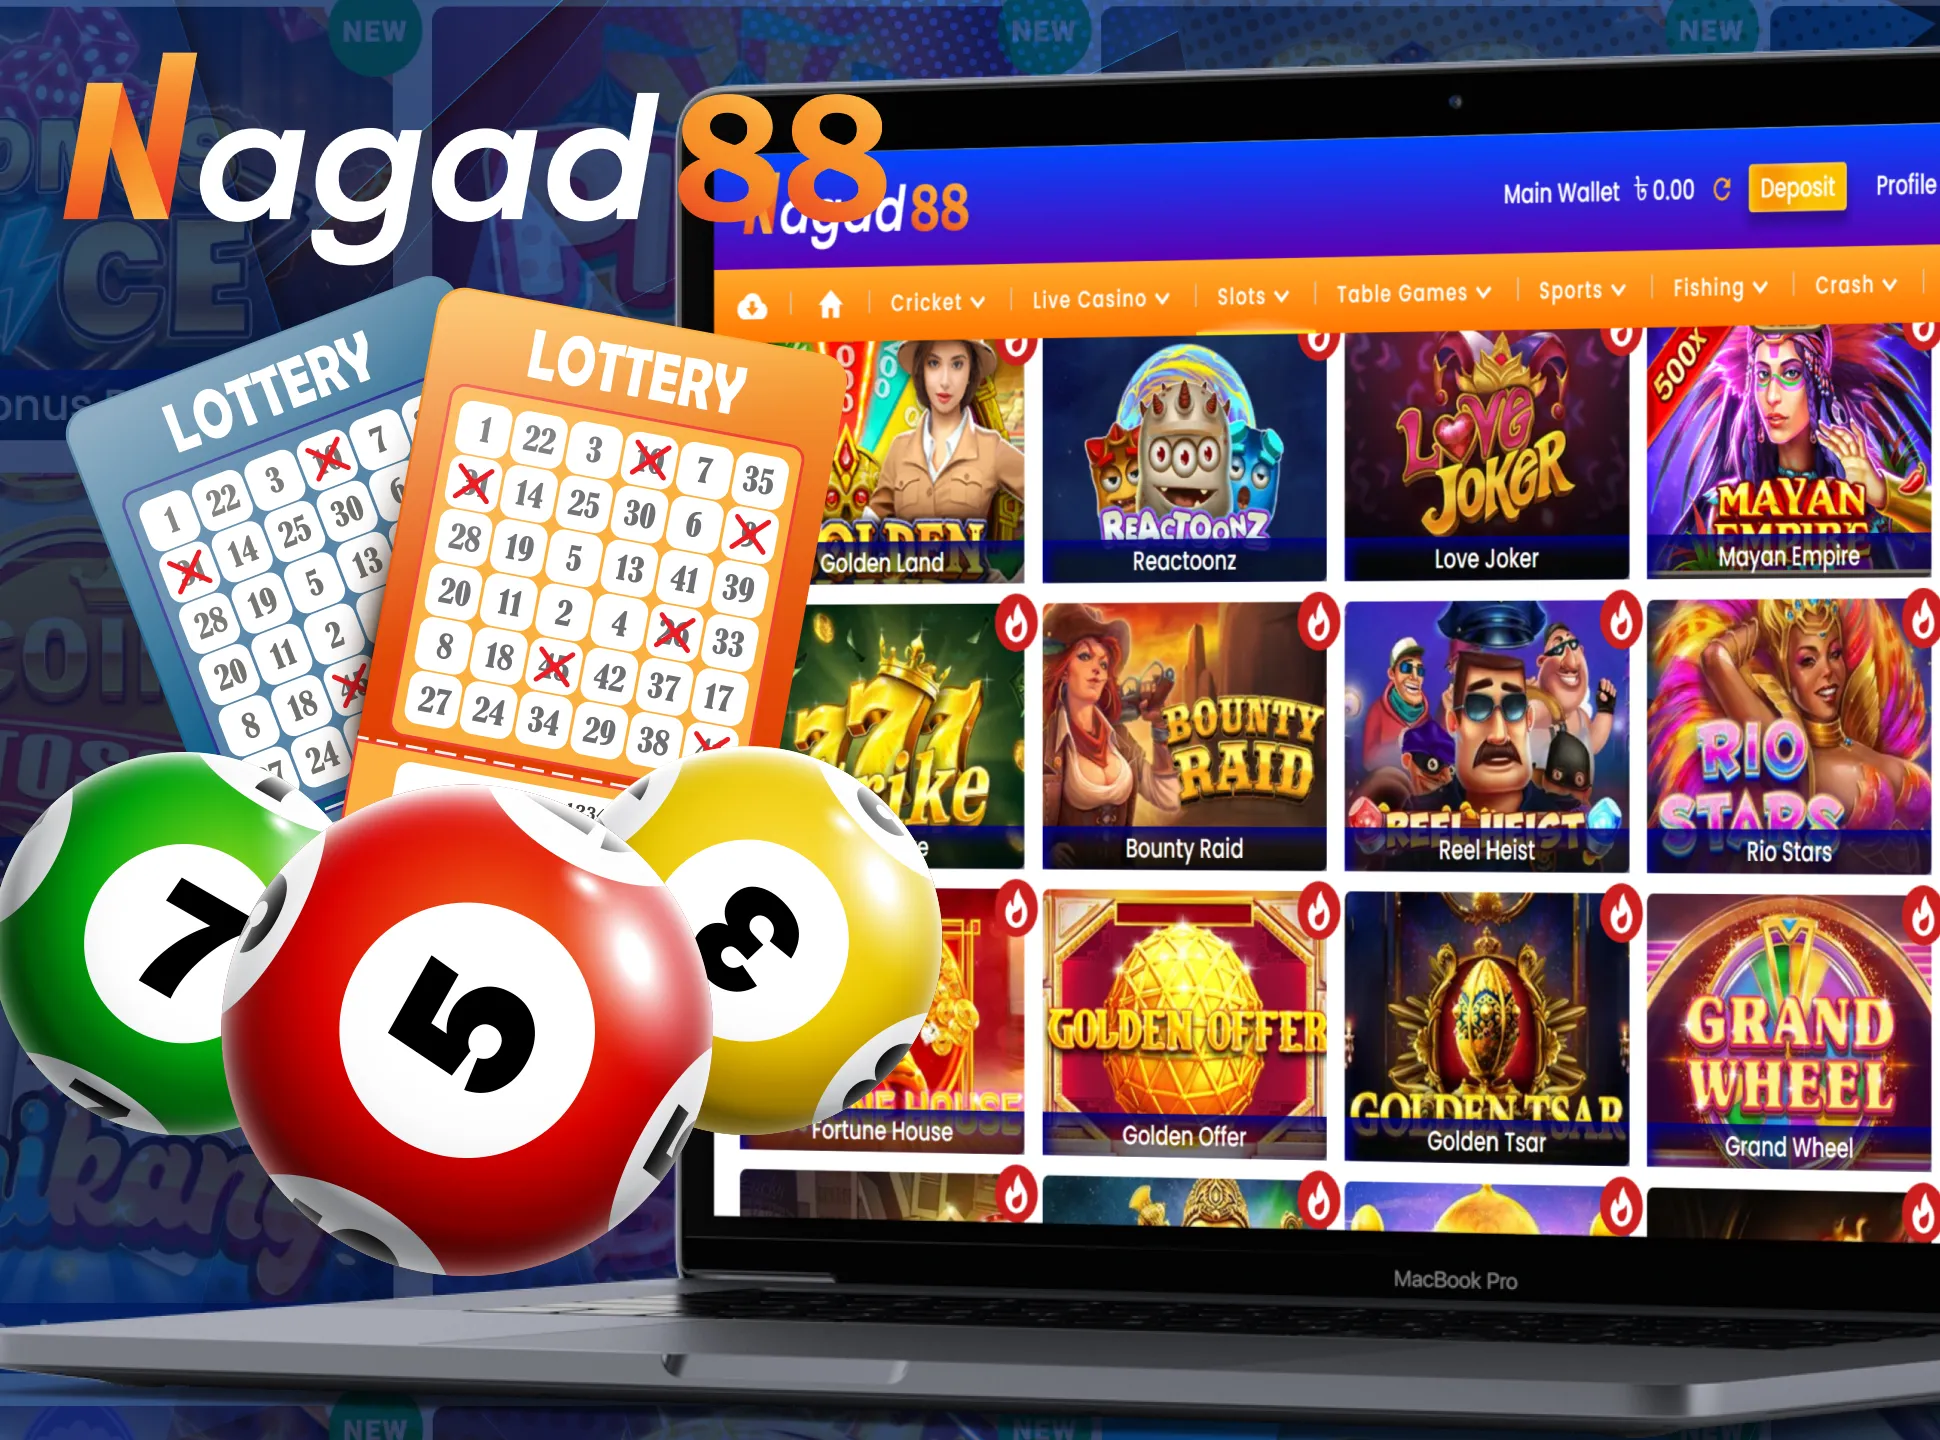 Play lottery at Nagad88 live casino.